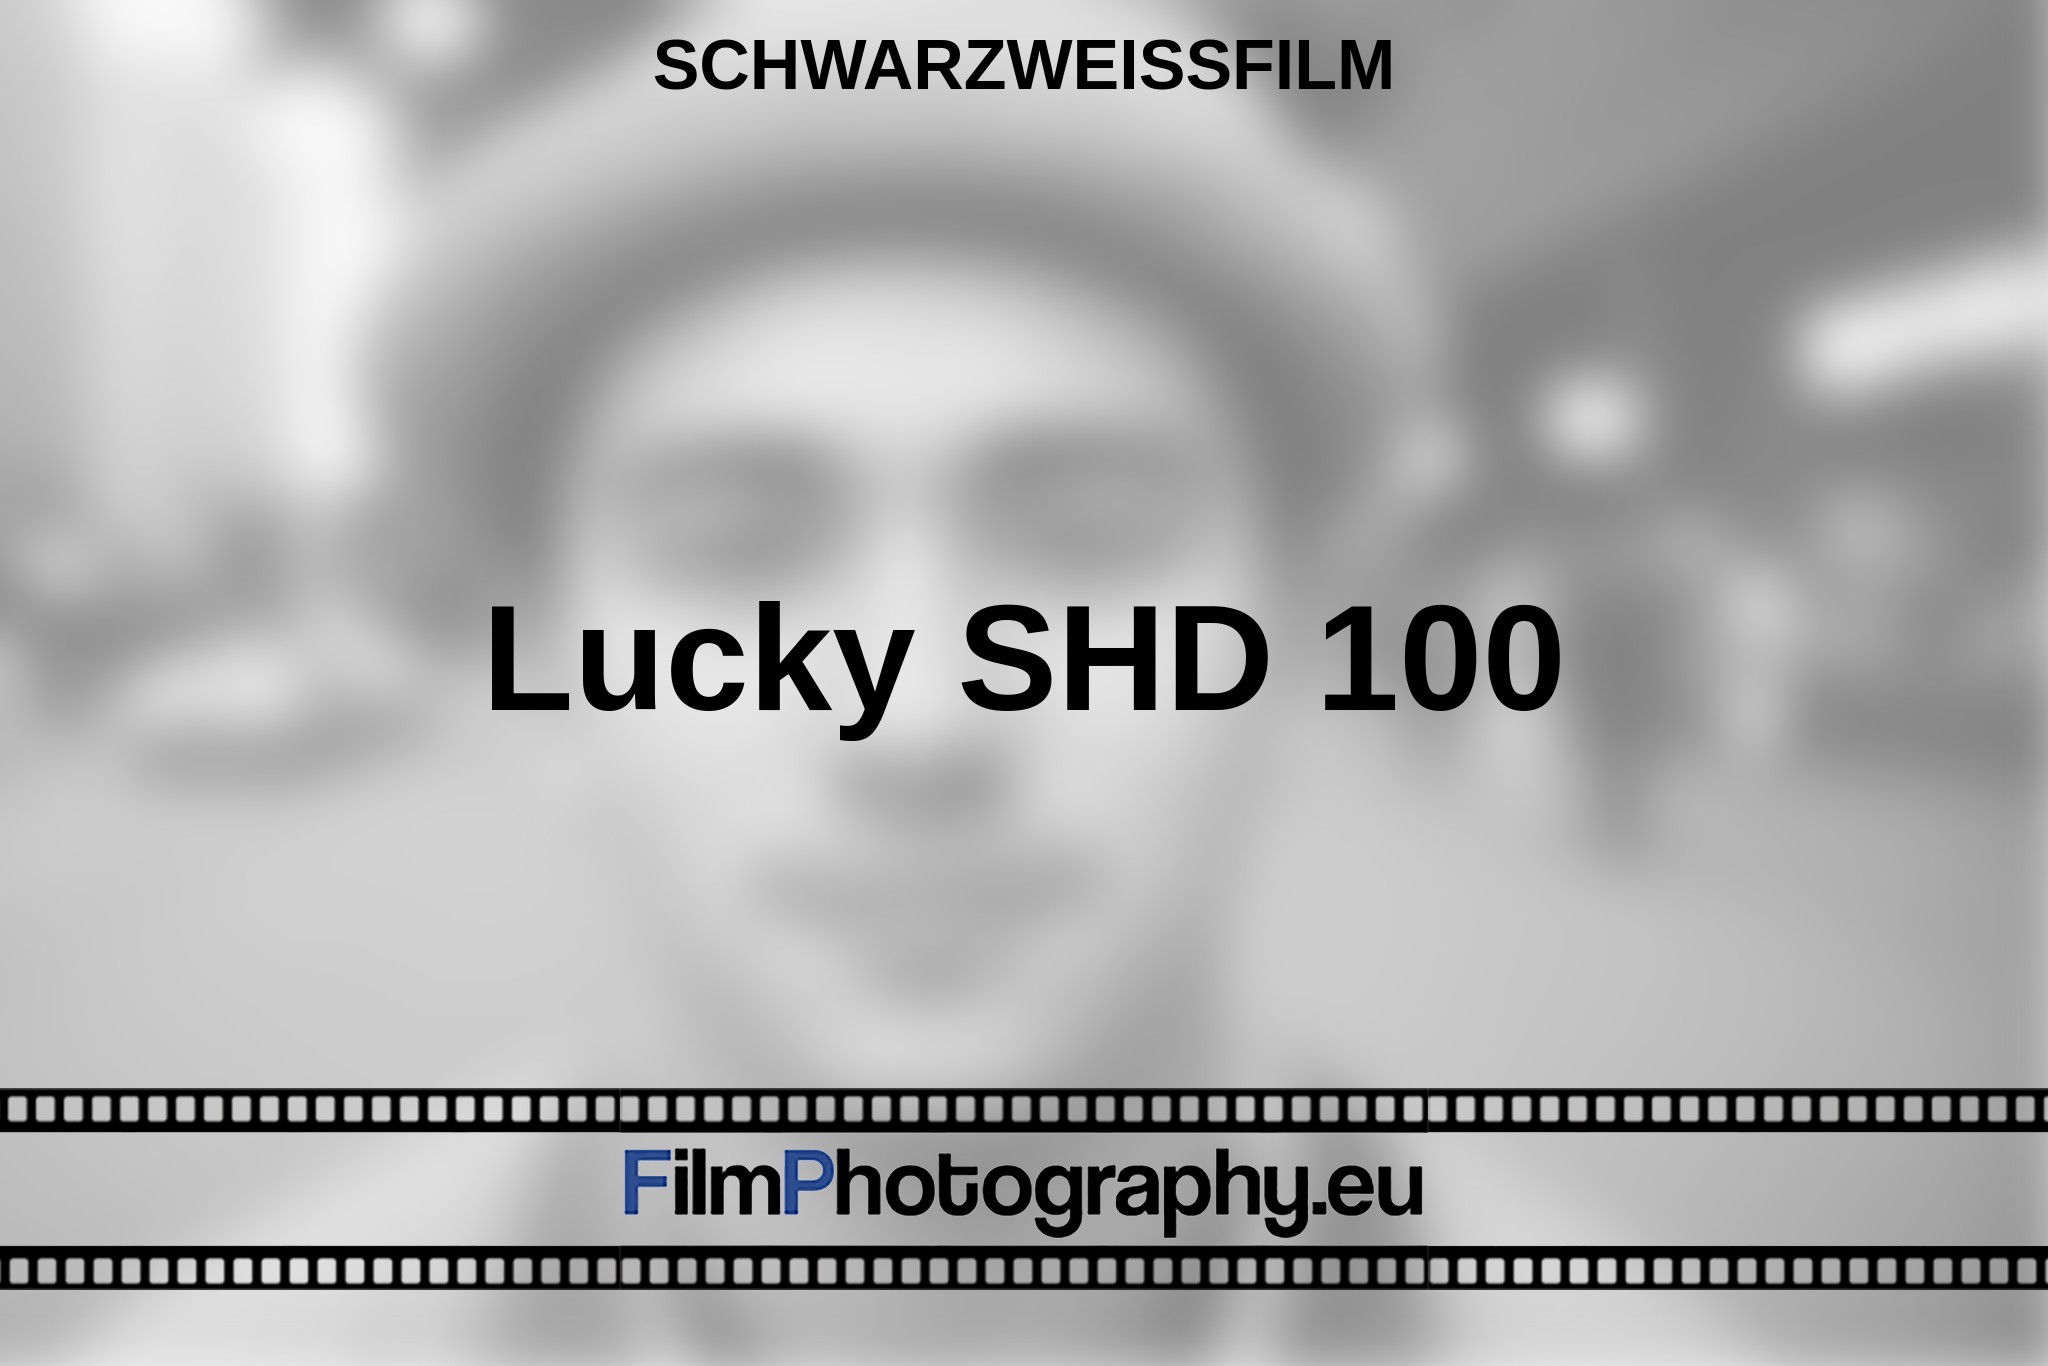 lucky-shd-100-schwarzweißfilm-bnv.jpg